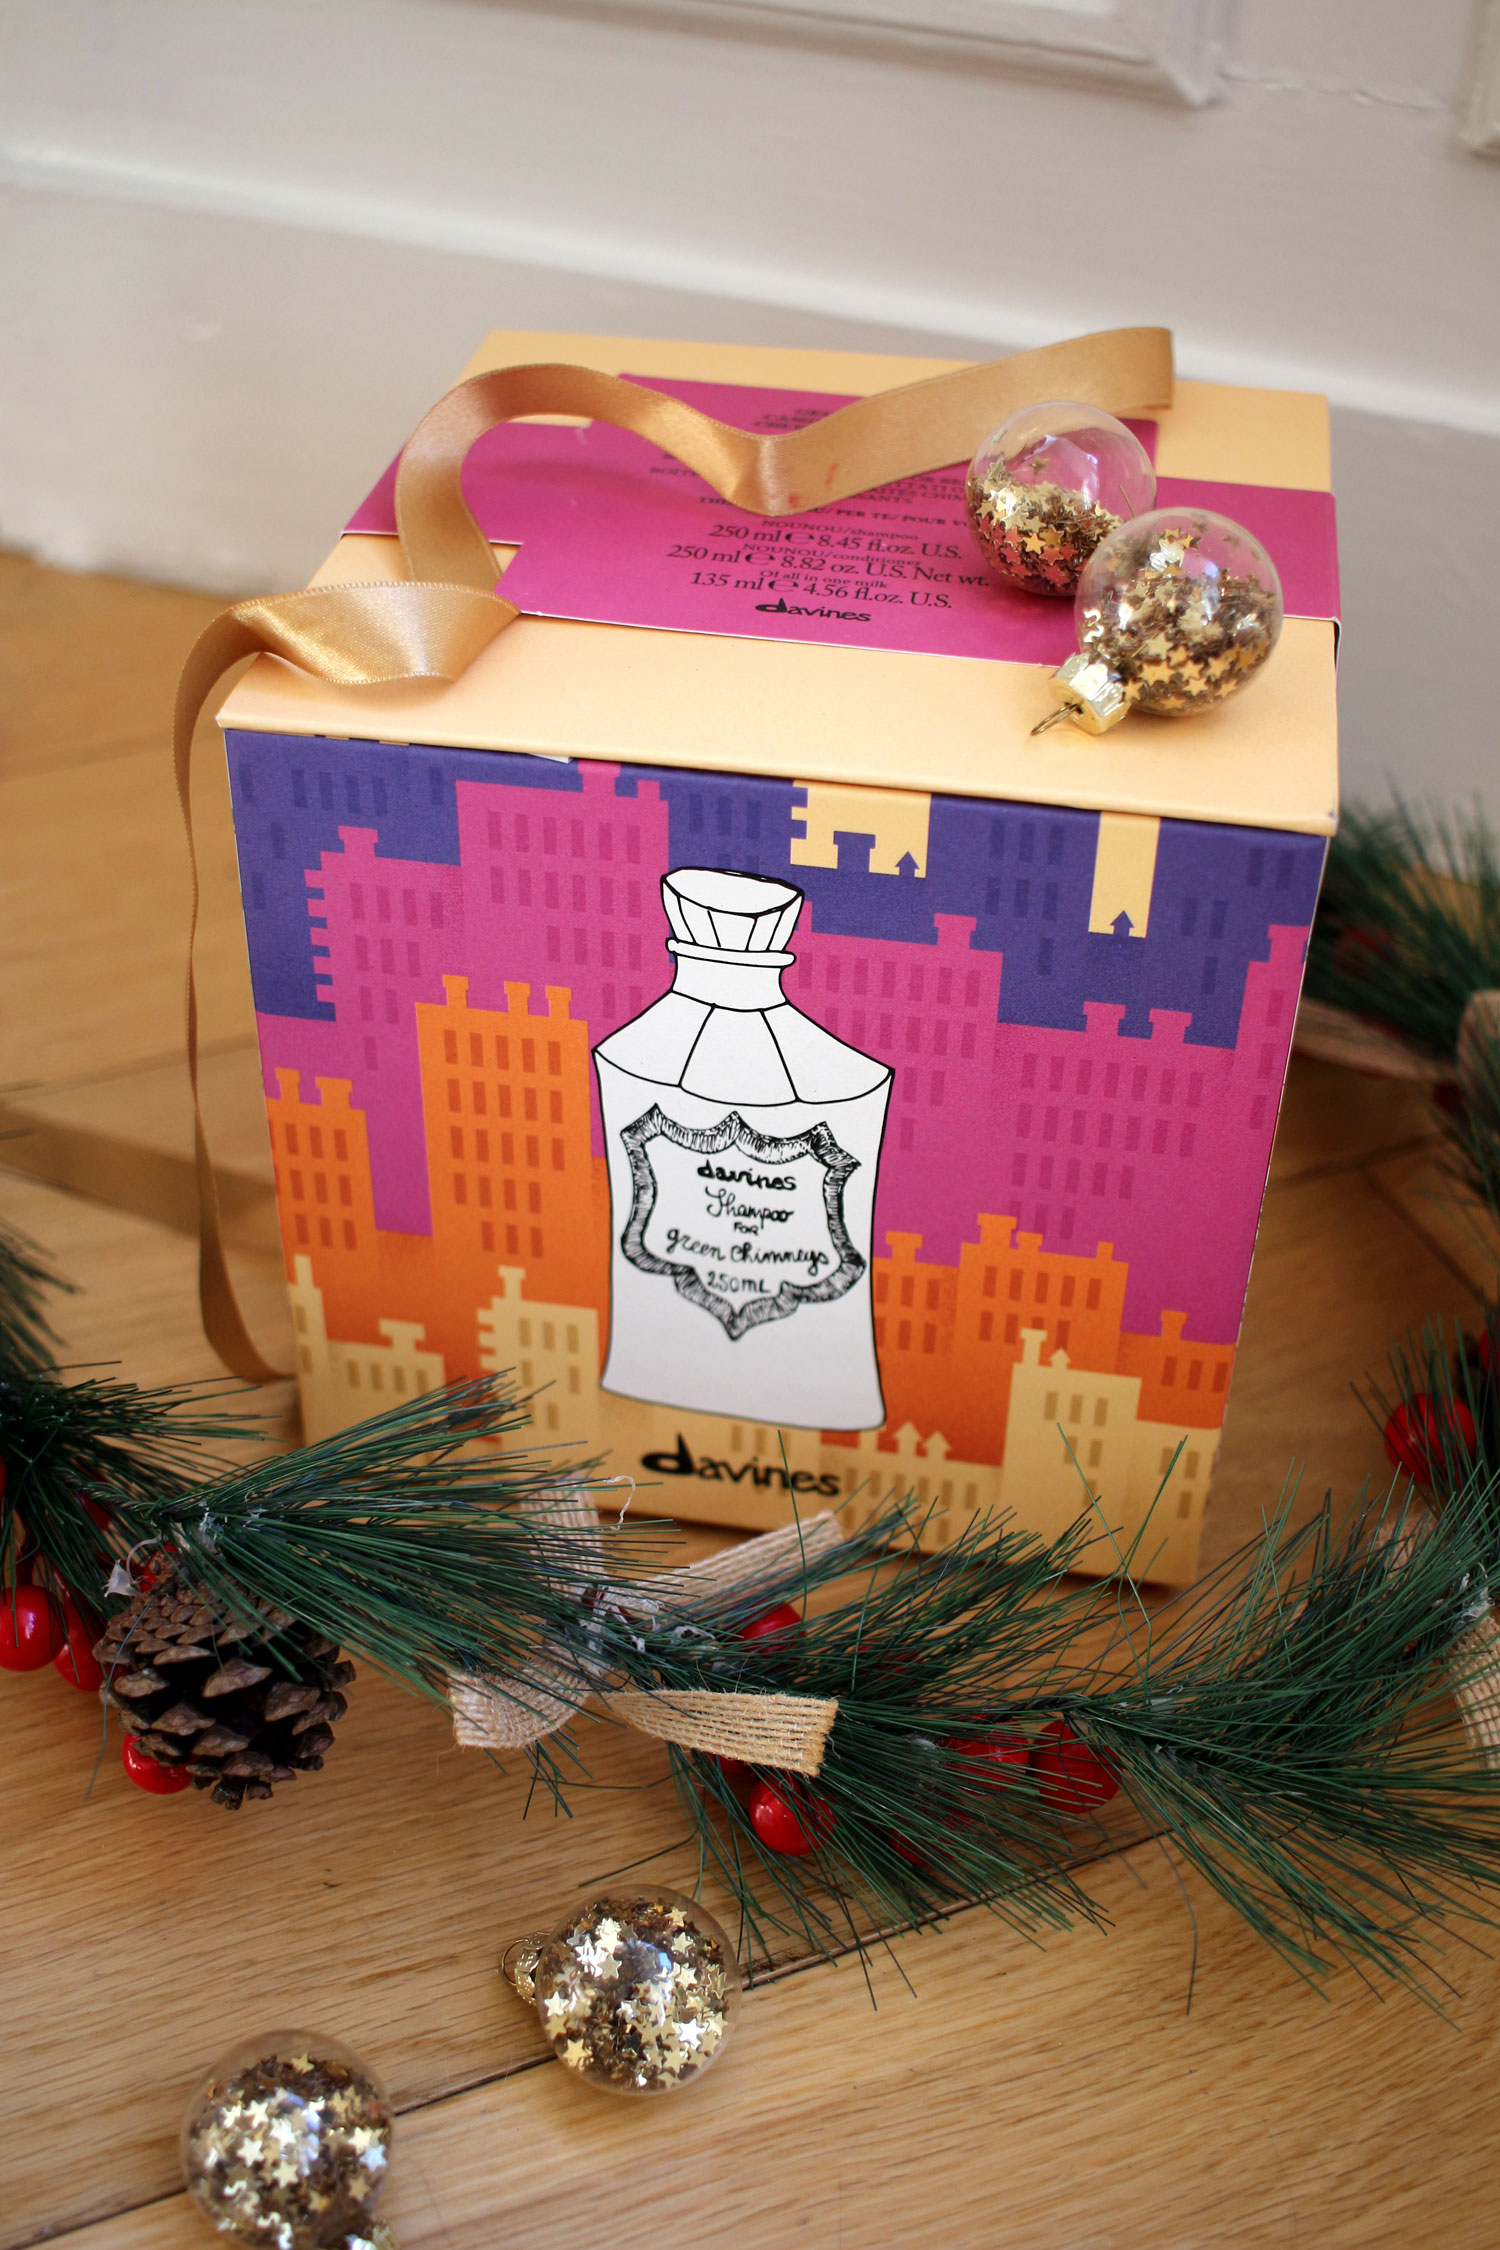 davines-green-chimneys-nounou-oi-milk-gift-box-review